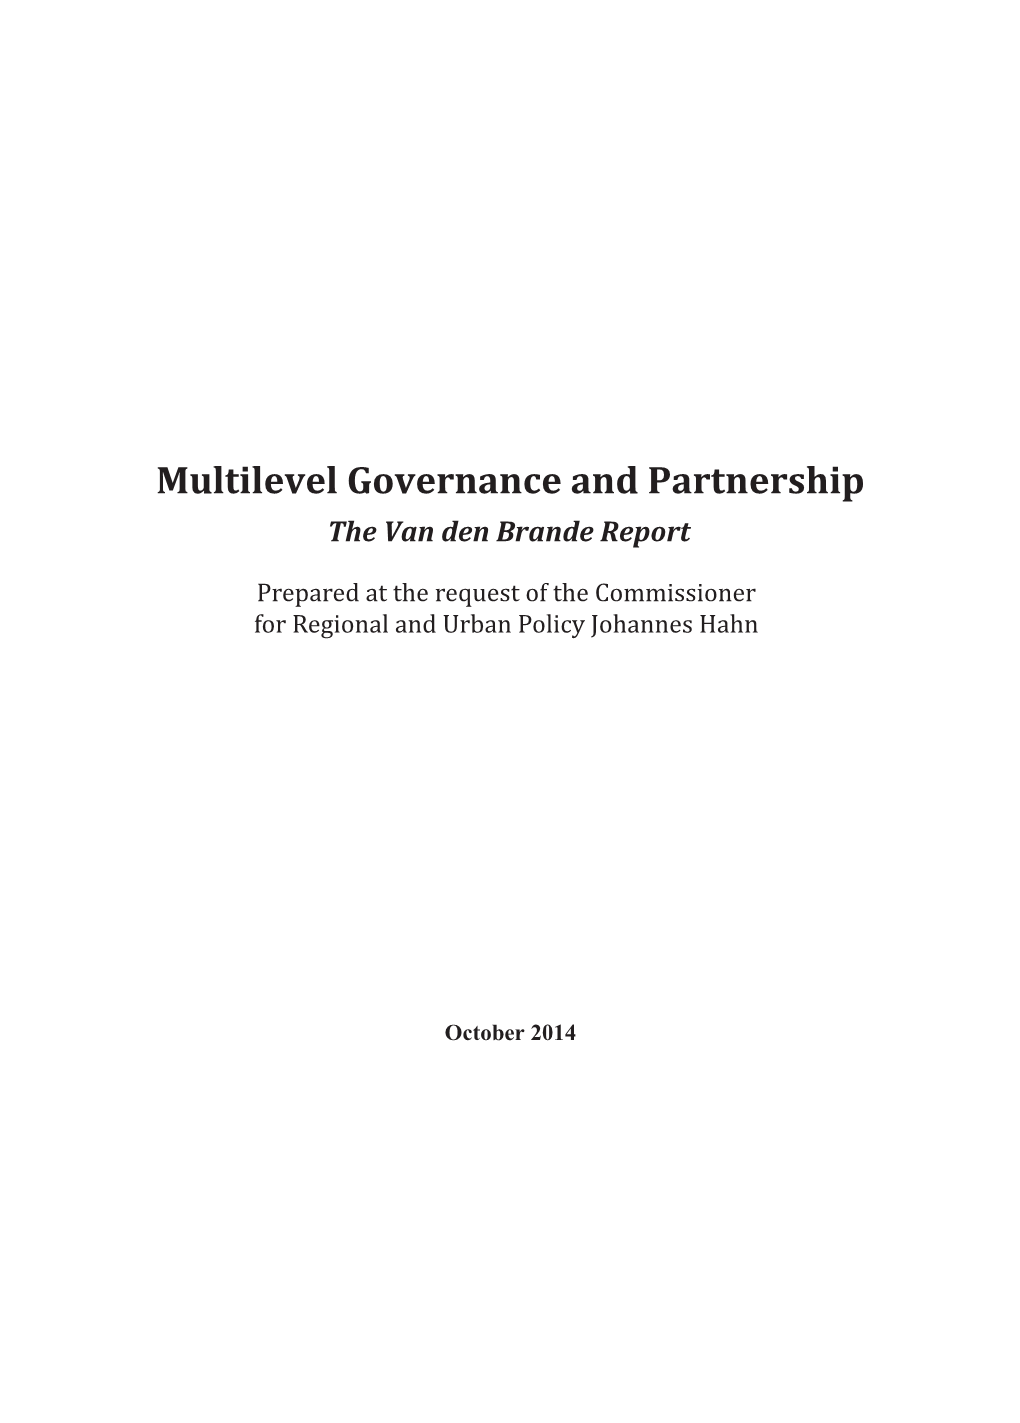 Multilevel Governance and Partnership the Van Den Brande Repor T